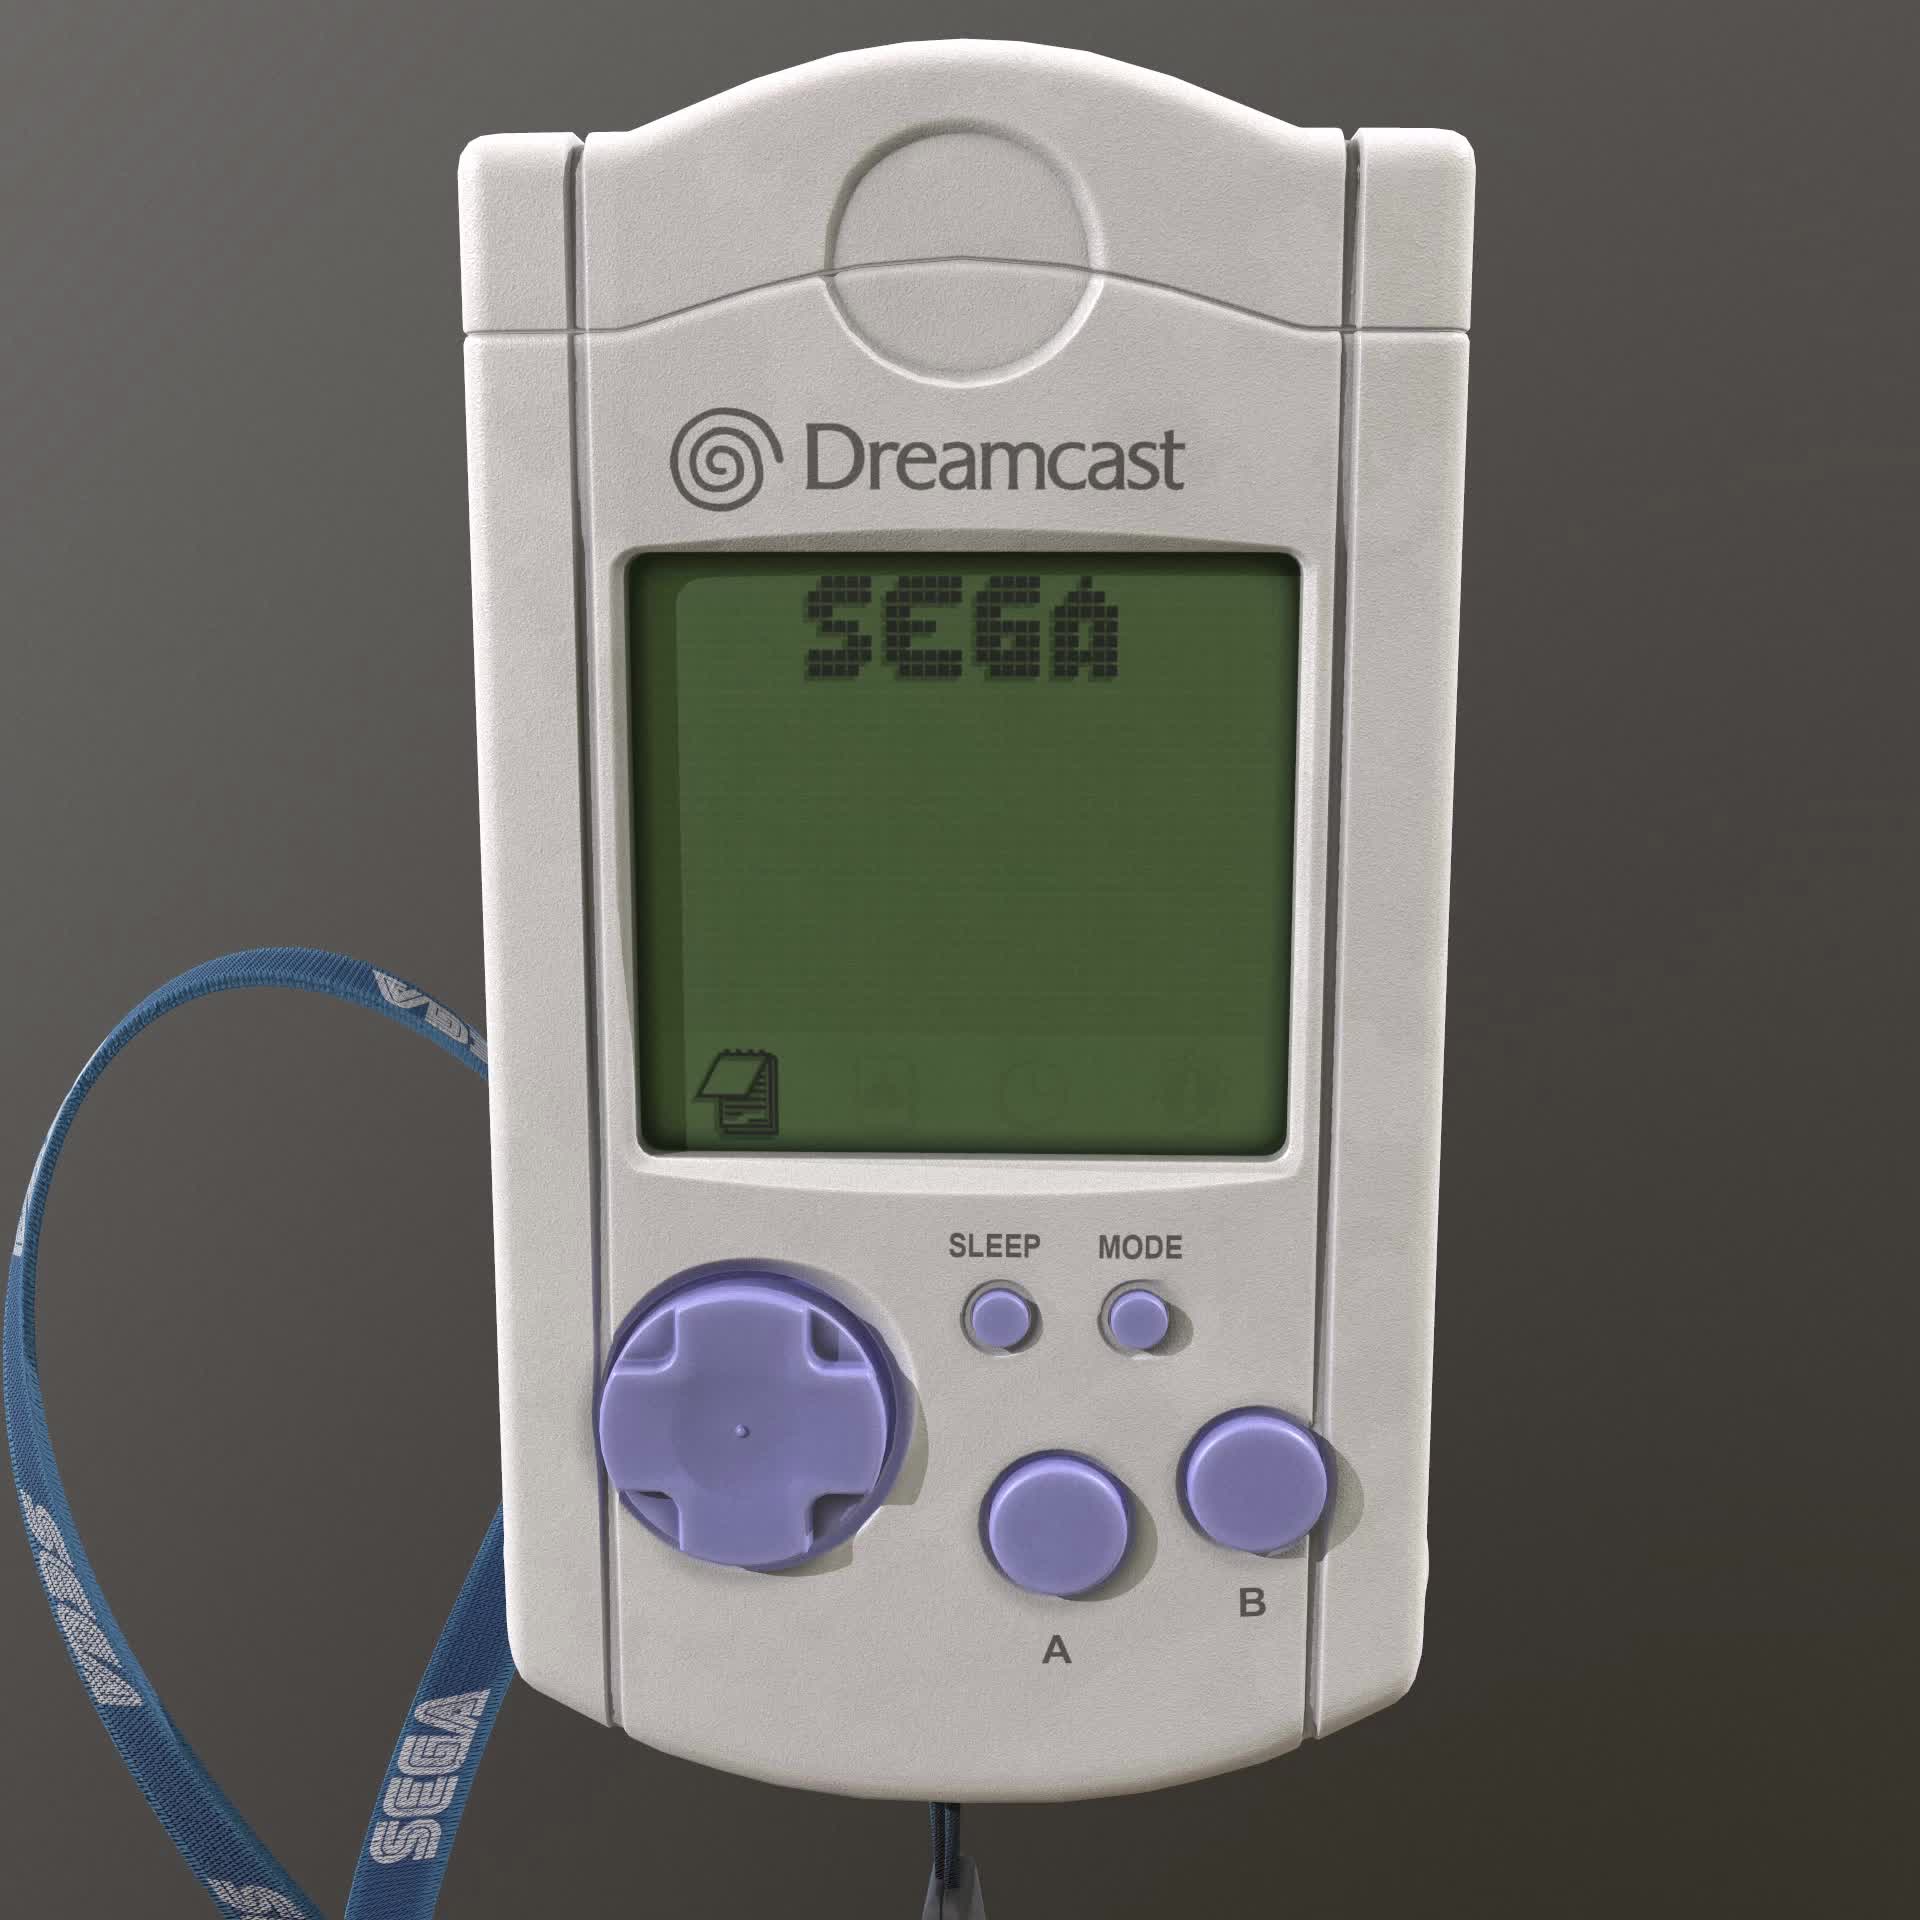 Sega Dreamcast's VMU - Visual Memory Unit